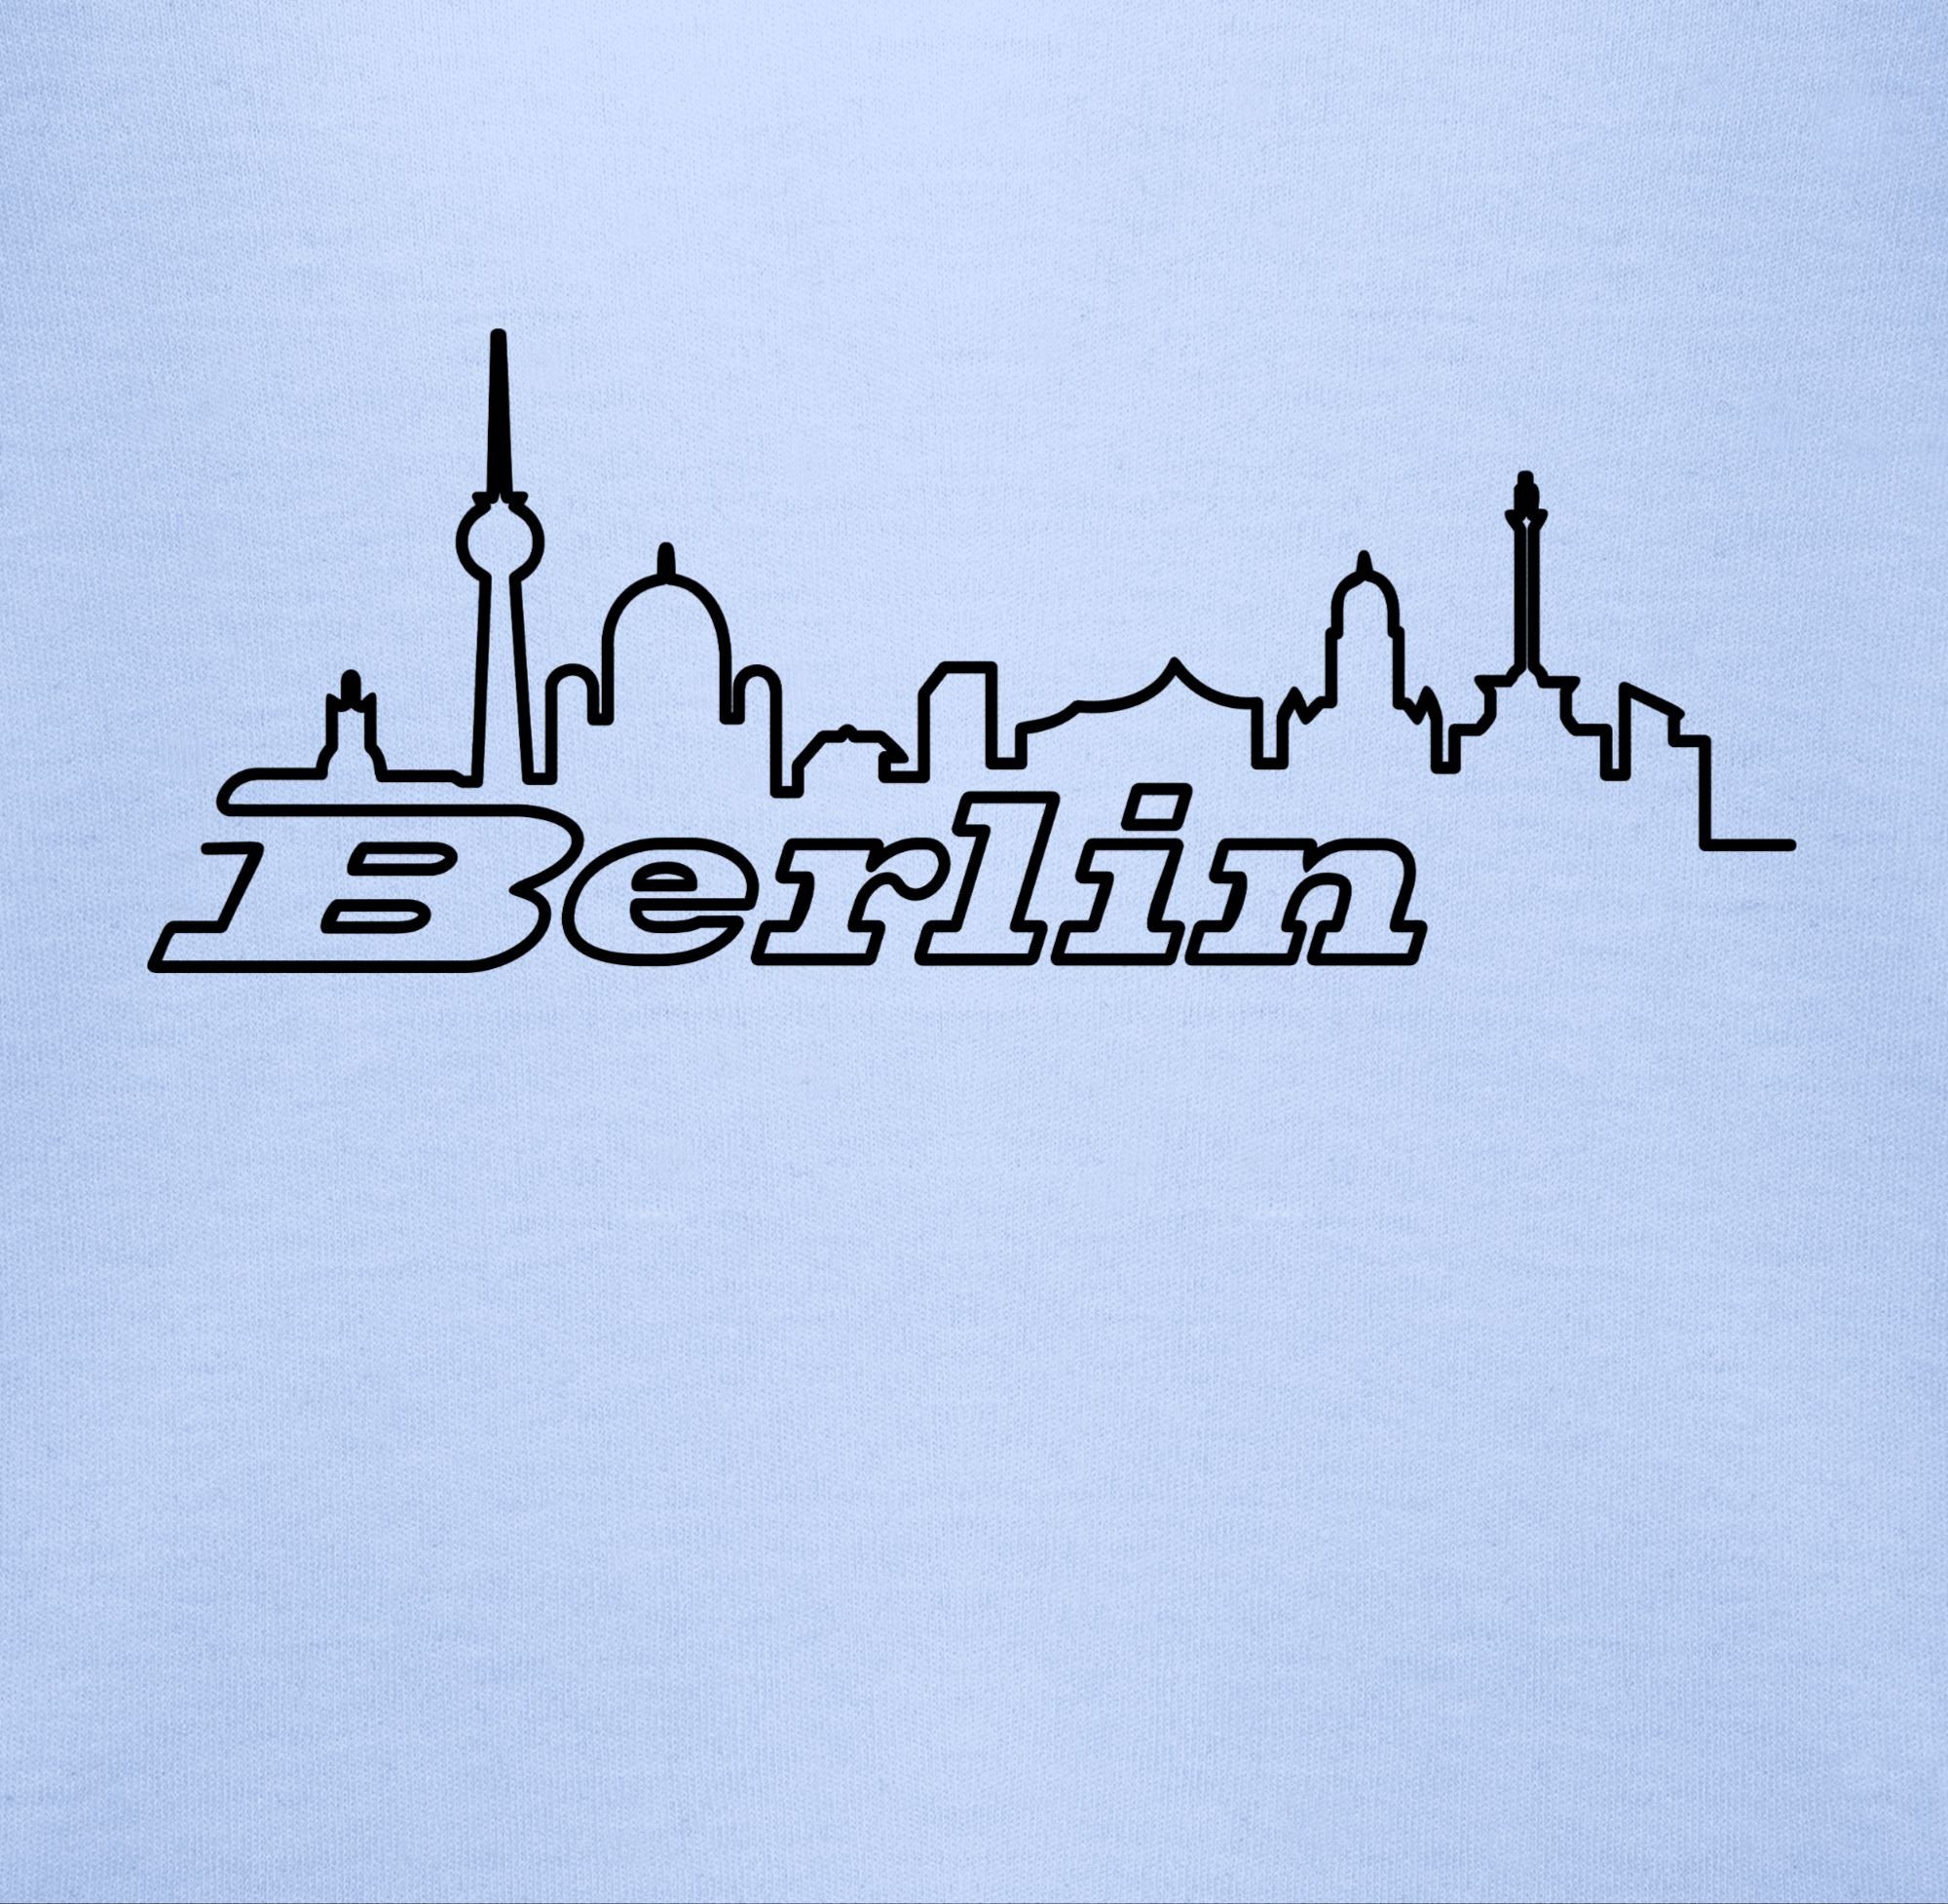 Skyline Babyblau Shirtbody Berlin Shirtracer 1 Länder Baby Wappen